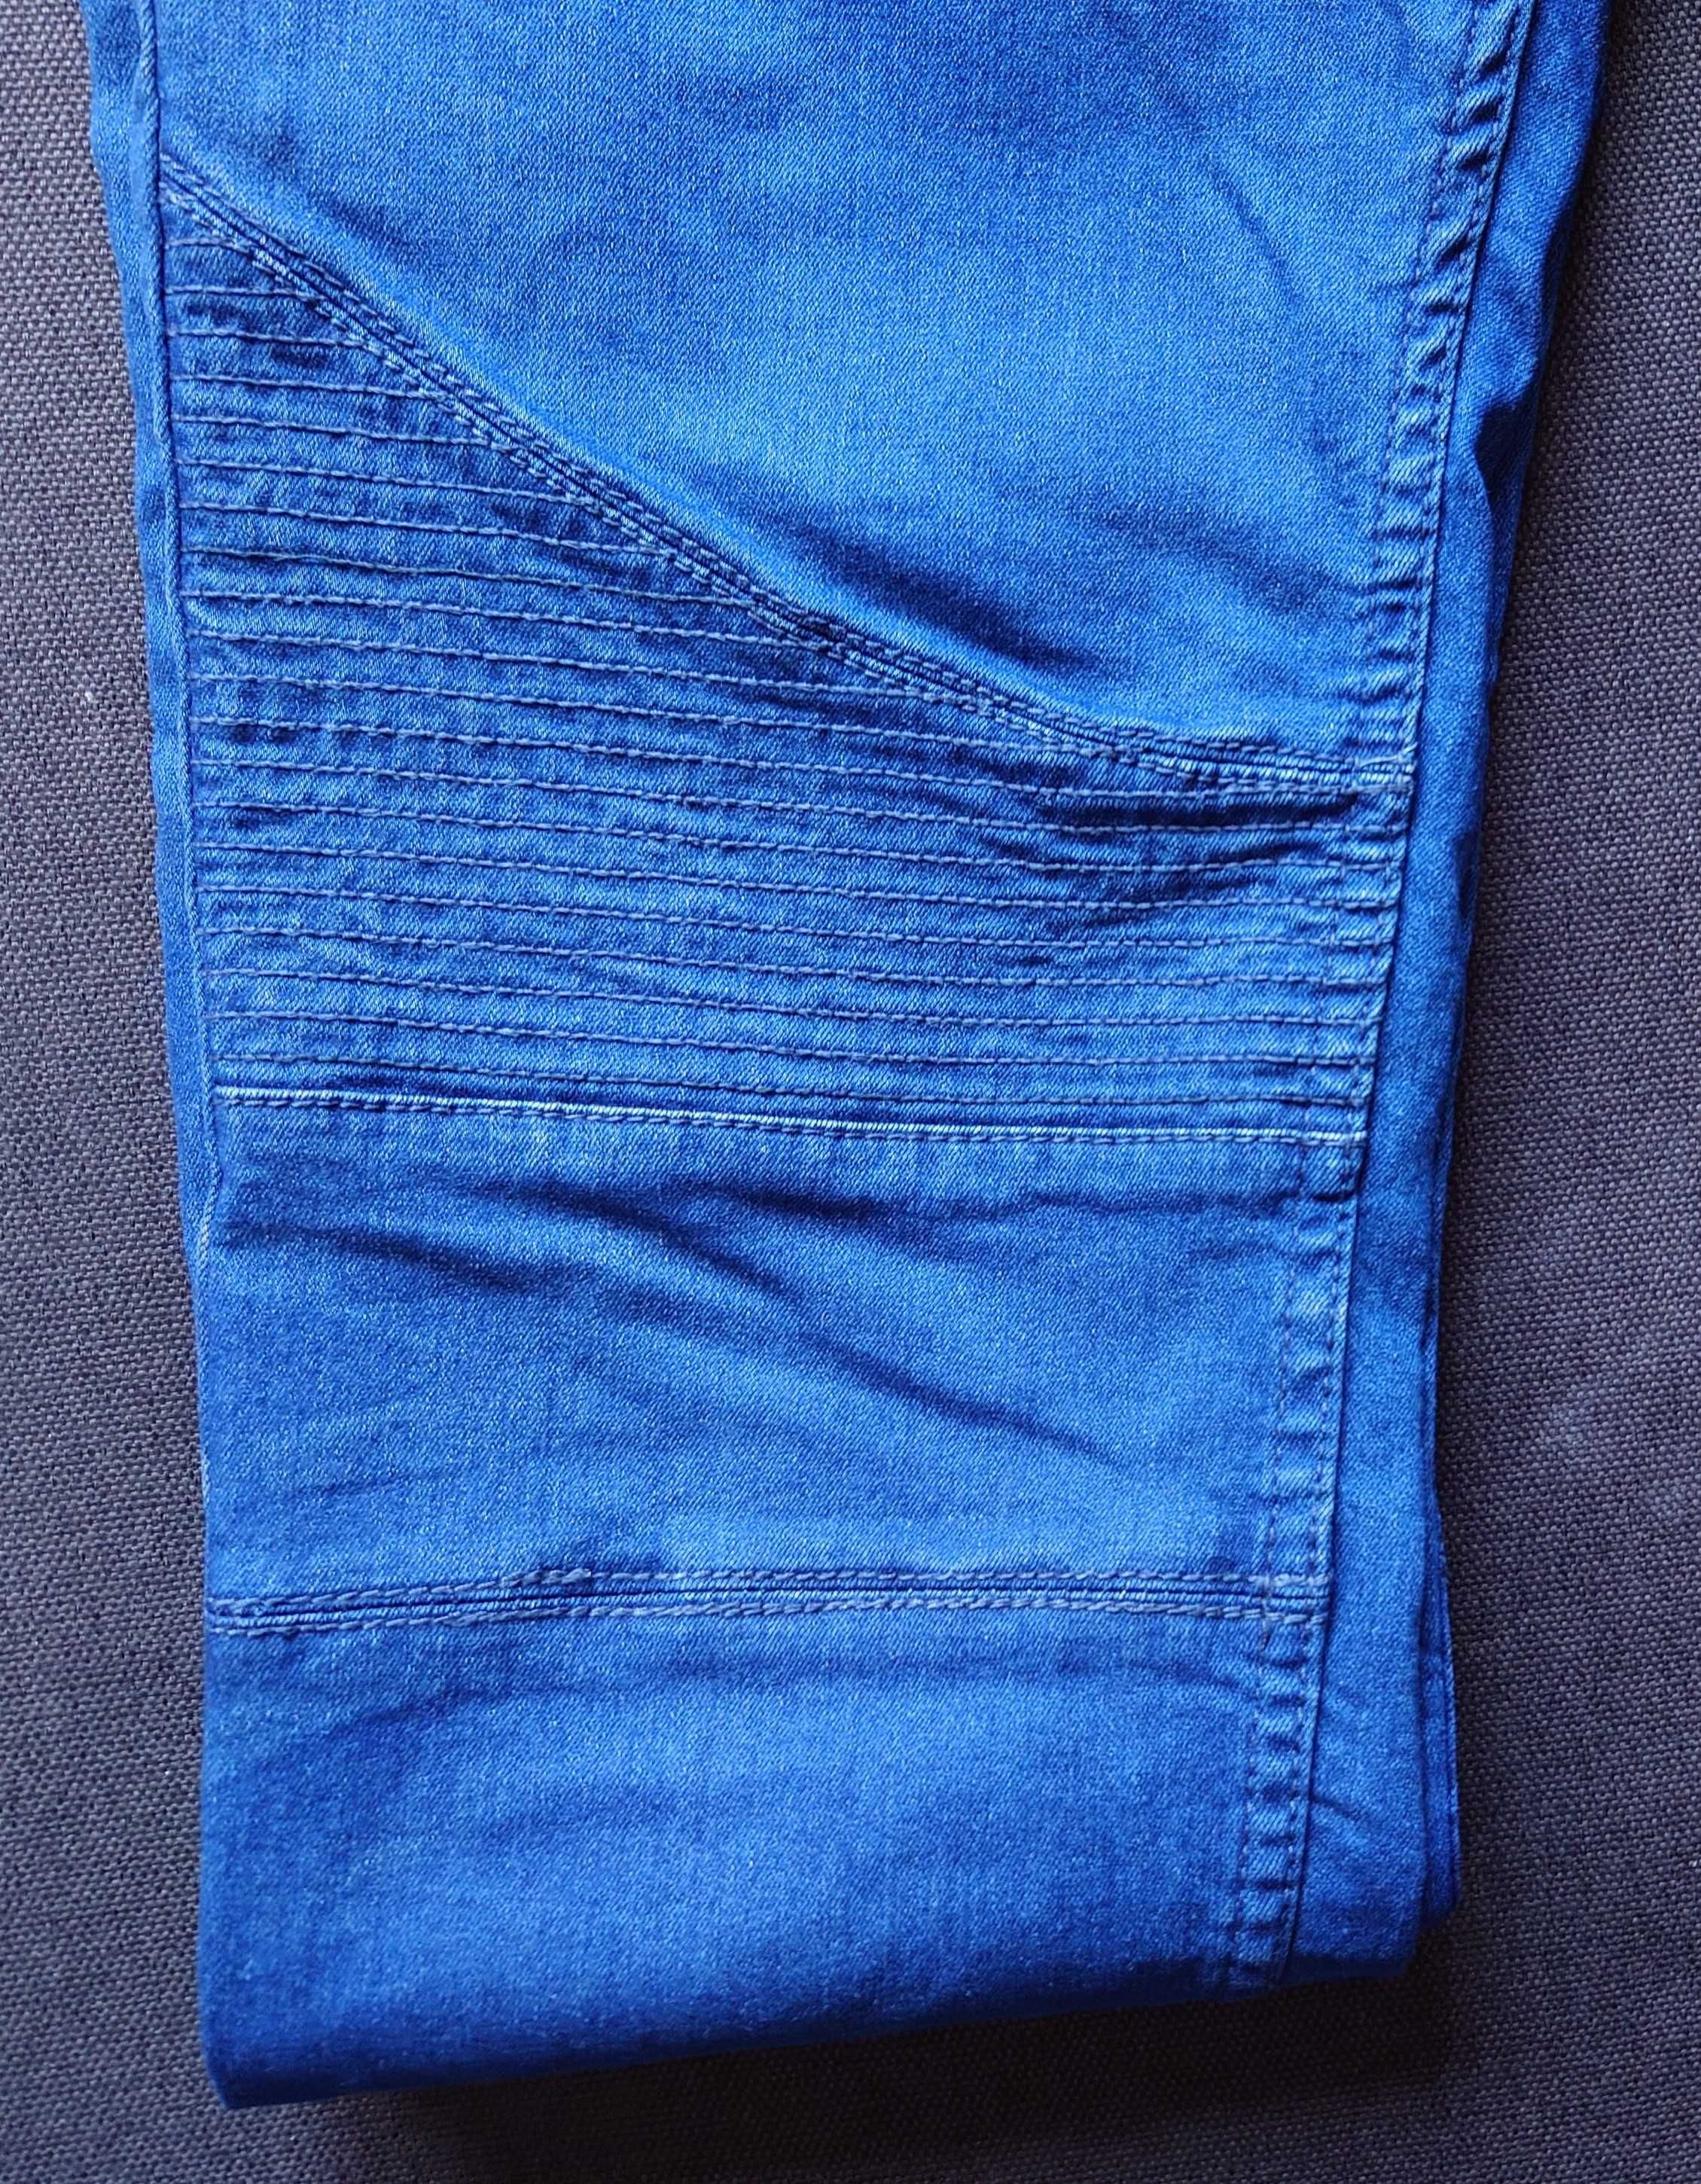 Spodnie jeans Bershka